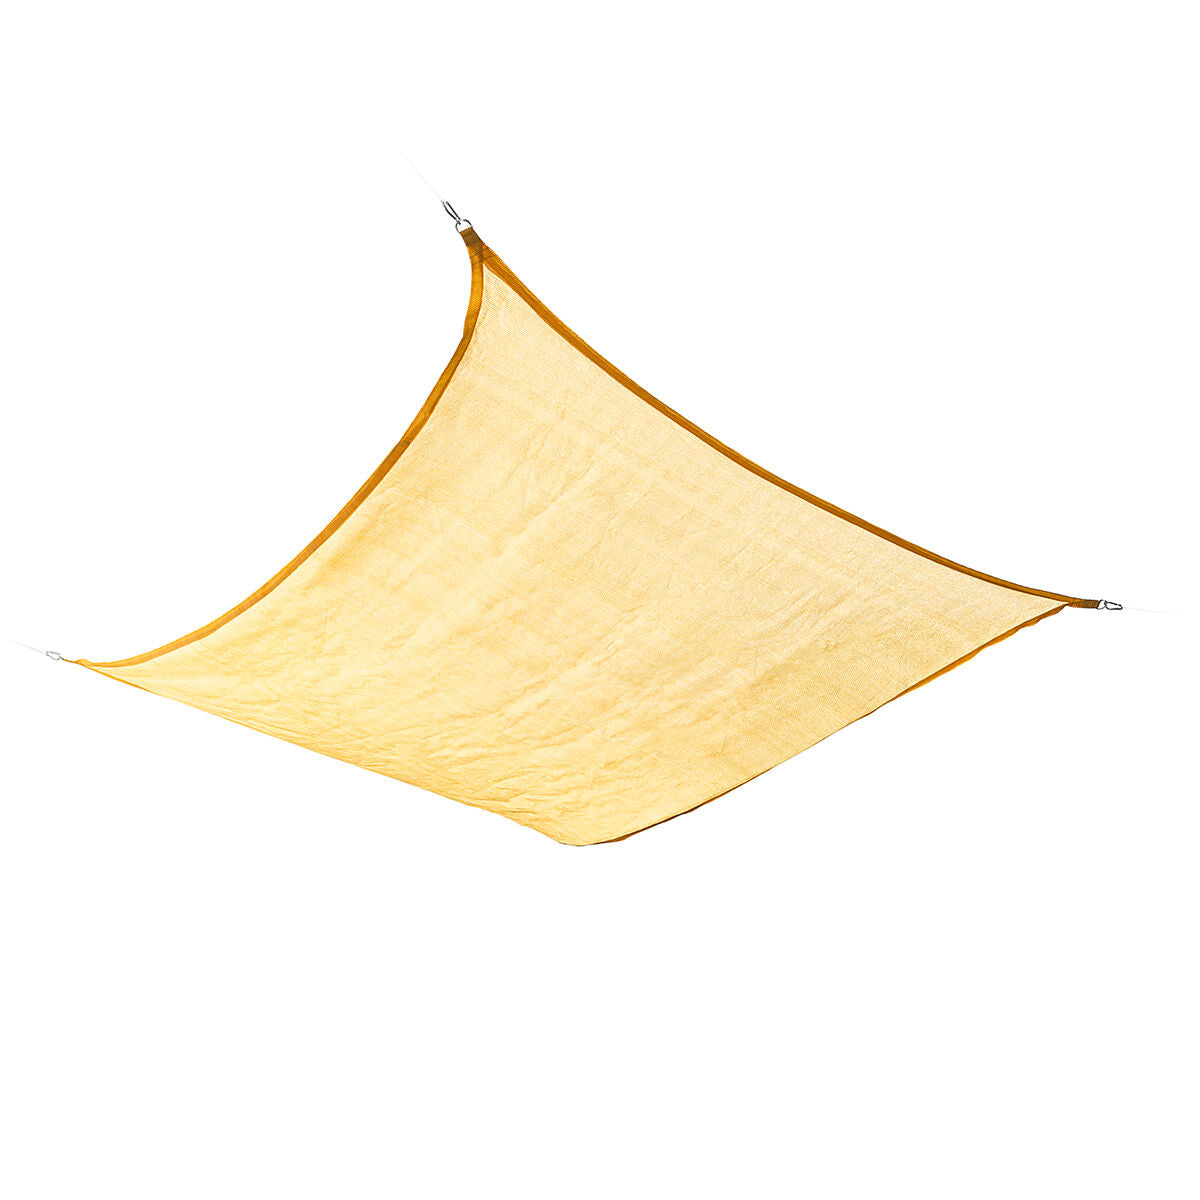 Rectangular shade sail